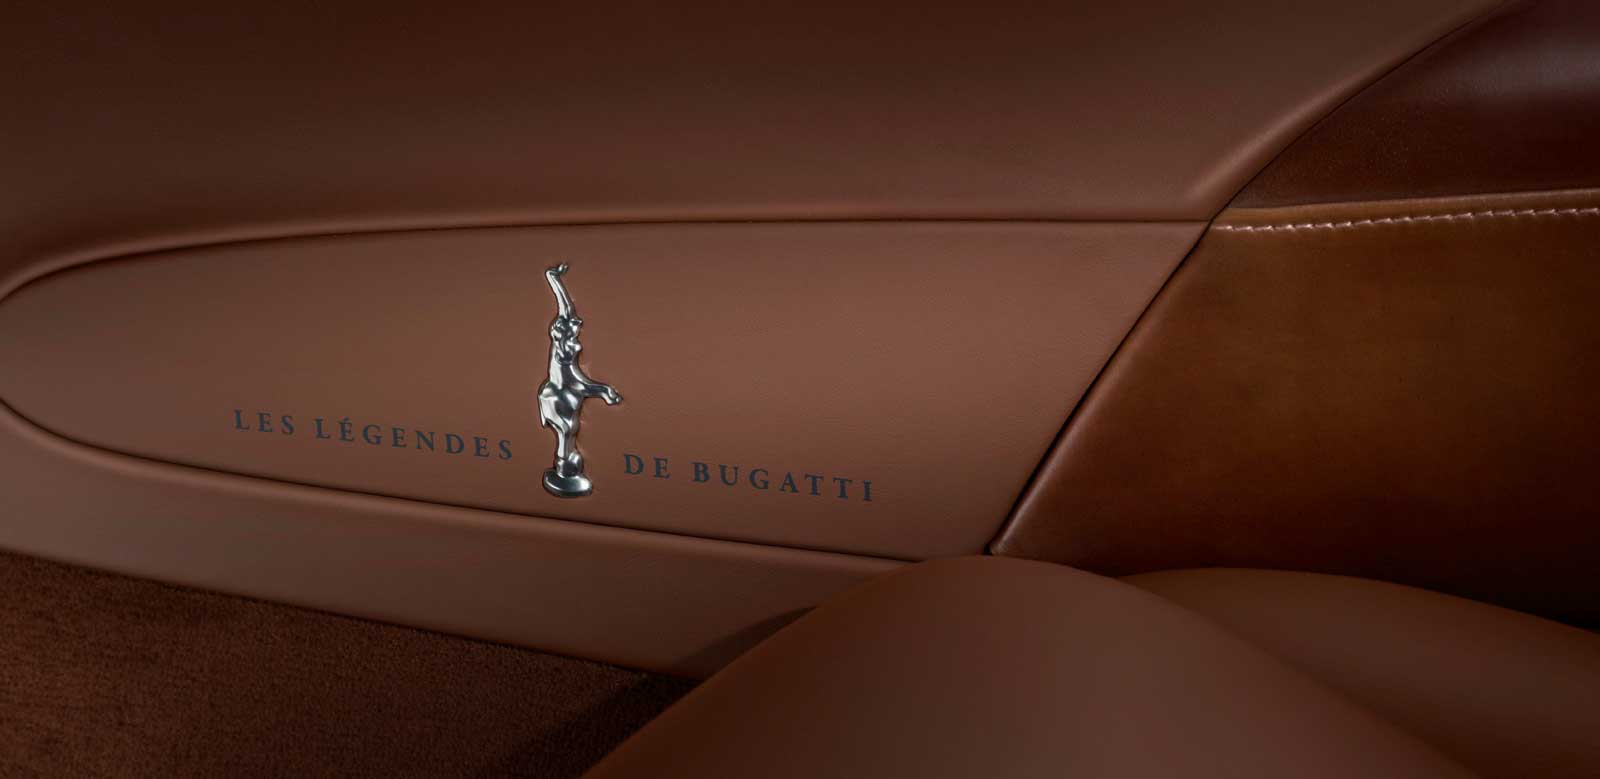 Bugatti, Bugatti-Veyron-Ettore-Bugatti-Edition-Mark: Nama “Ettore Bugatti” Digunakan Sebagai Nama Terakhir Bugatti Veyron